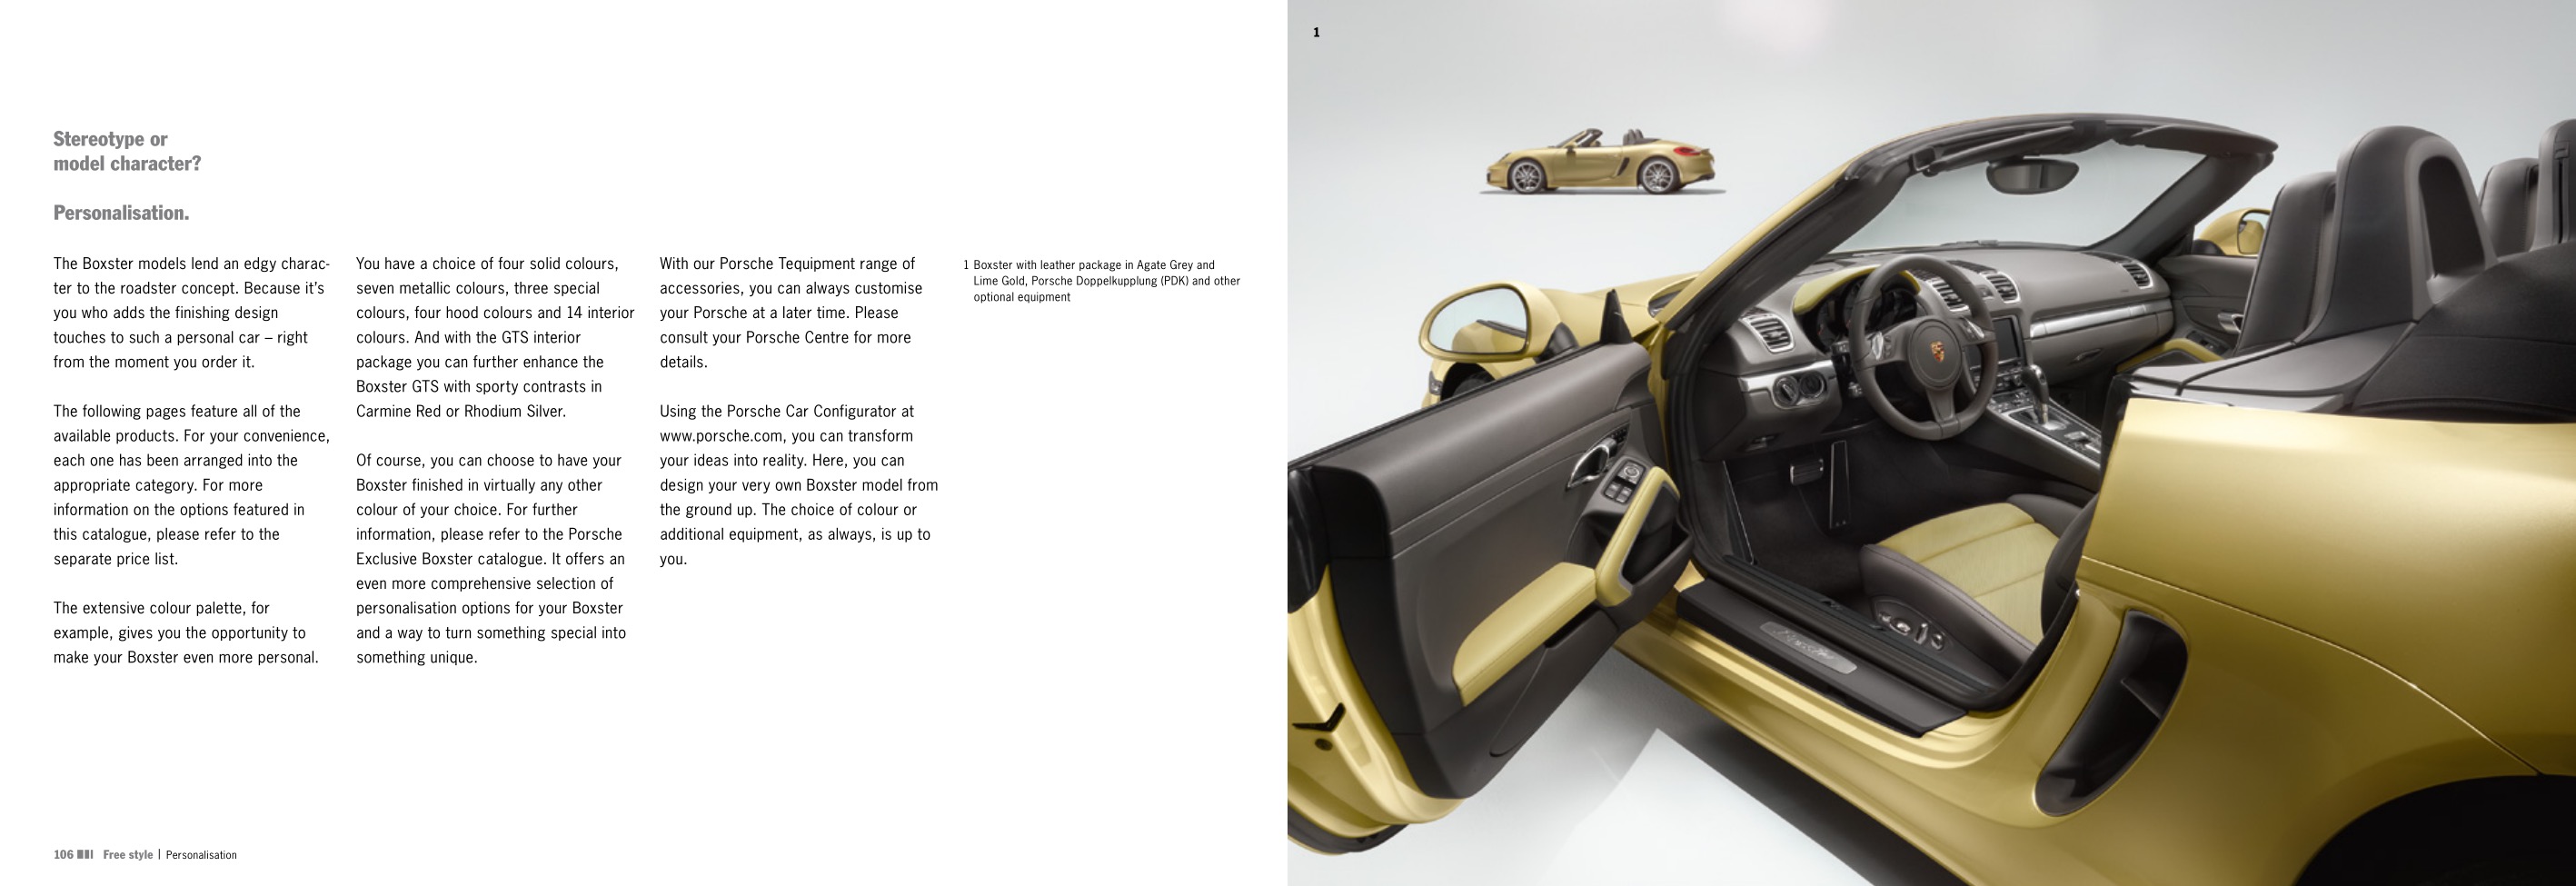 2015 Porsche Boxster Brochure Page 25